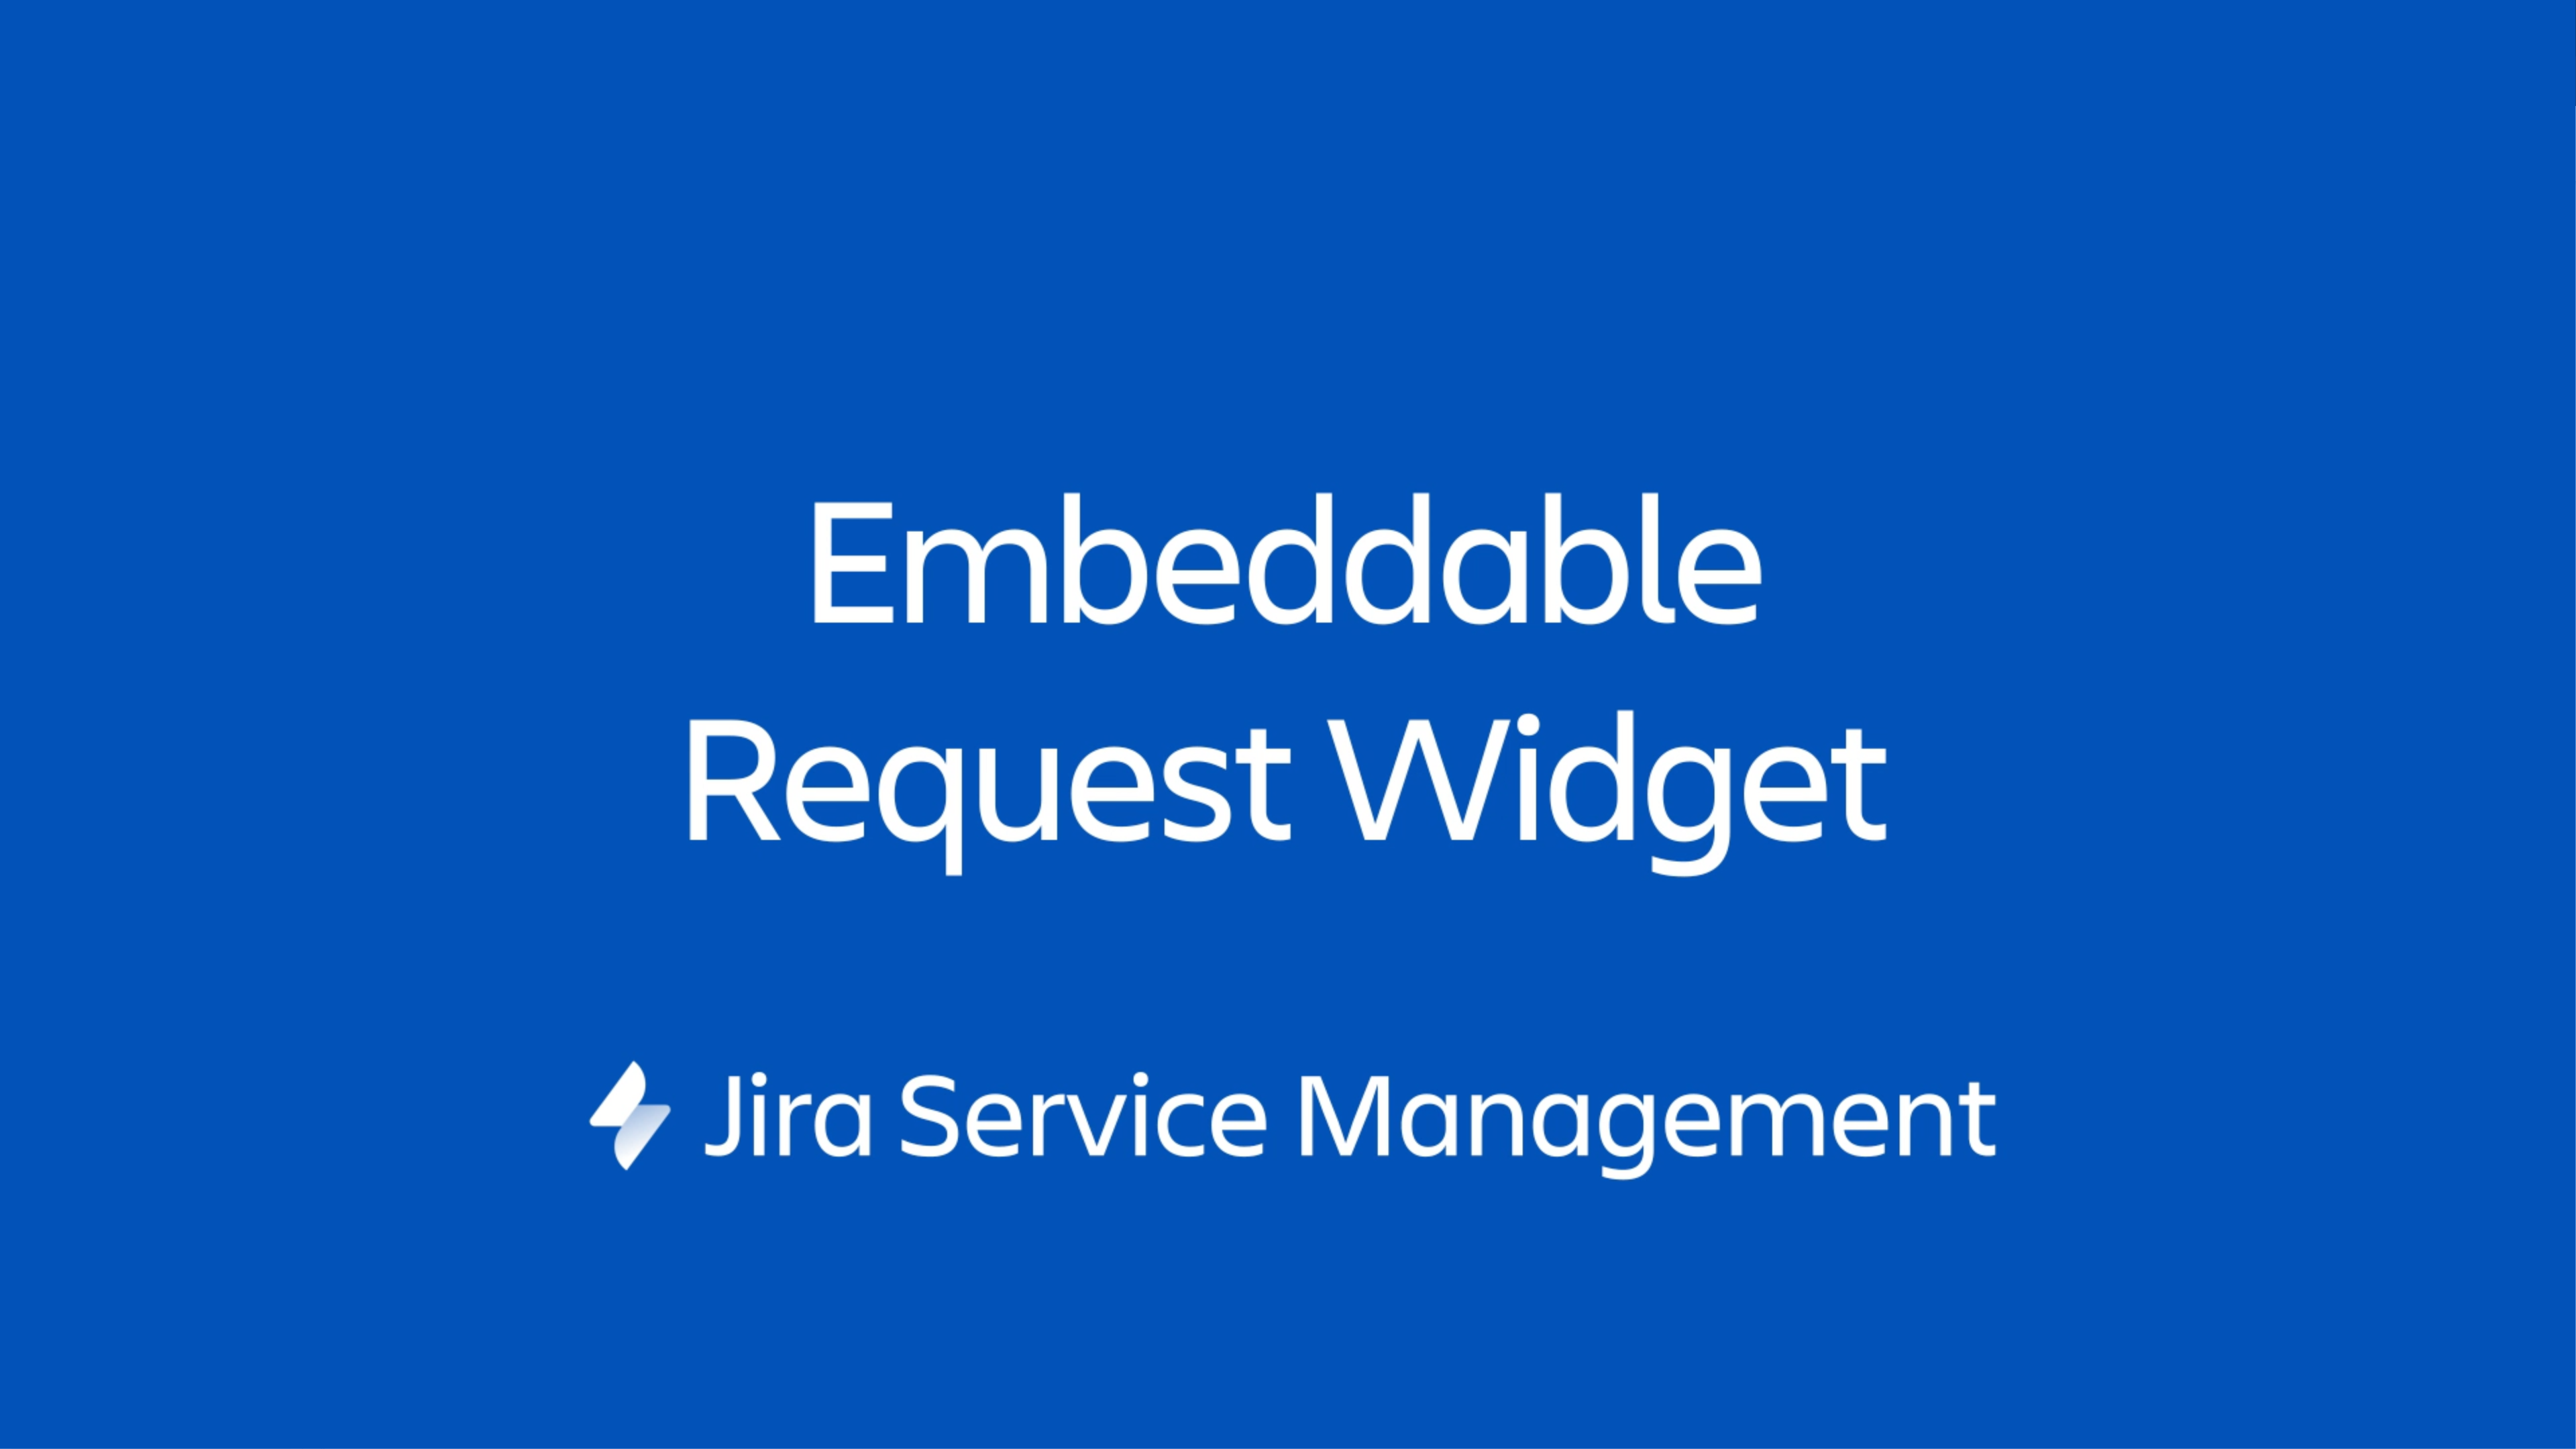 Jira Service Management 위젯은 사용자가 관리하는 모든 웹 페이지에 포함할 수 있는 미니 포털입니다.